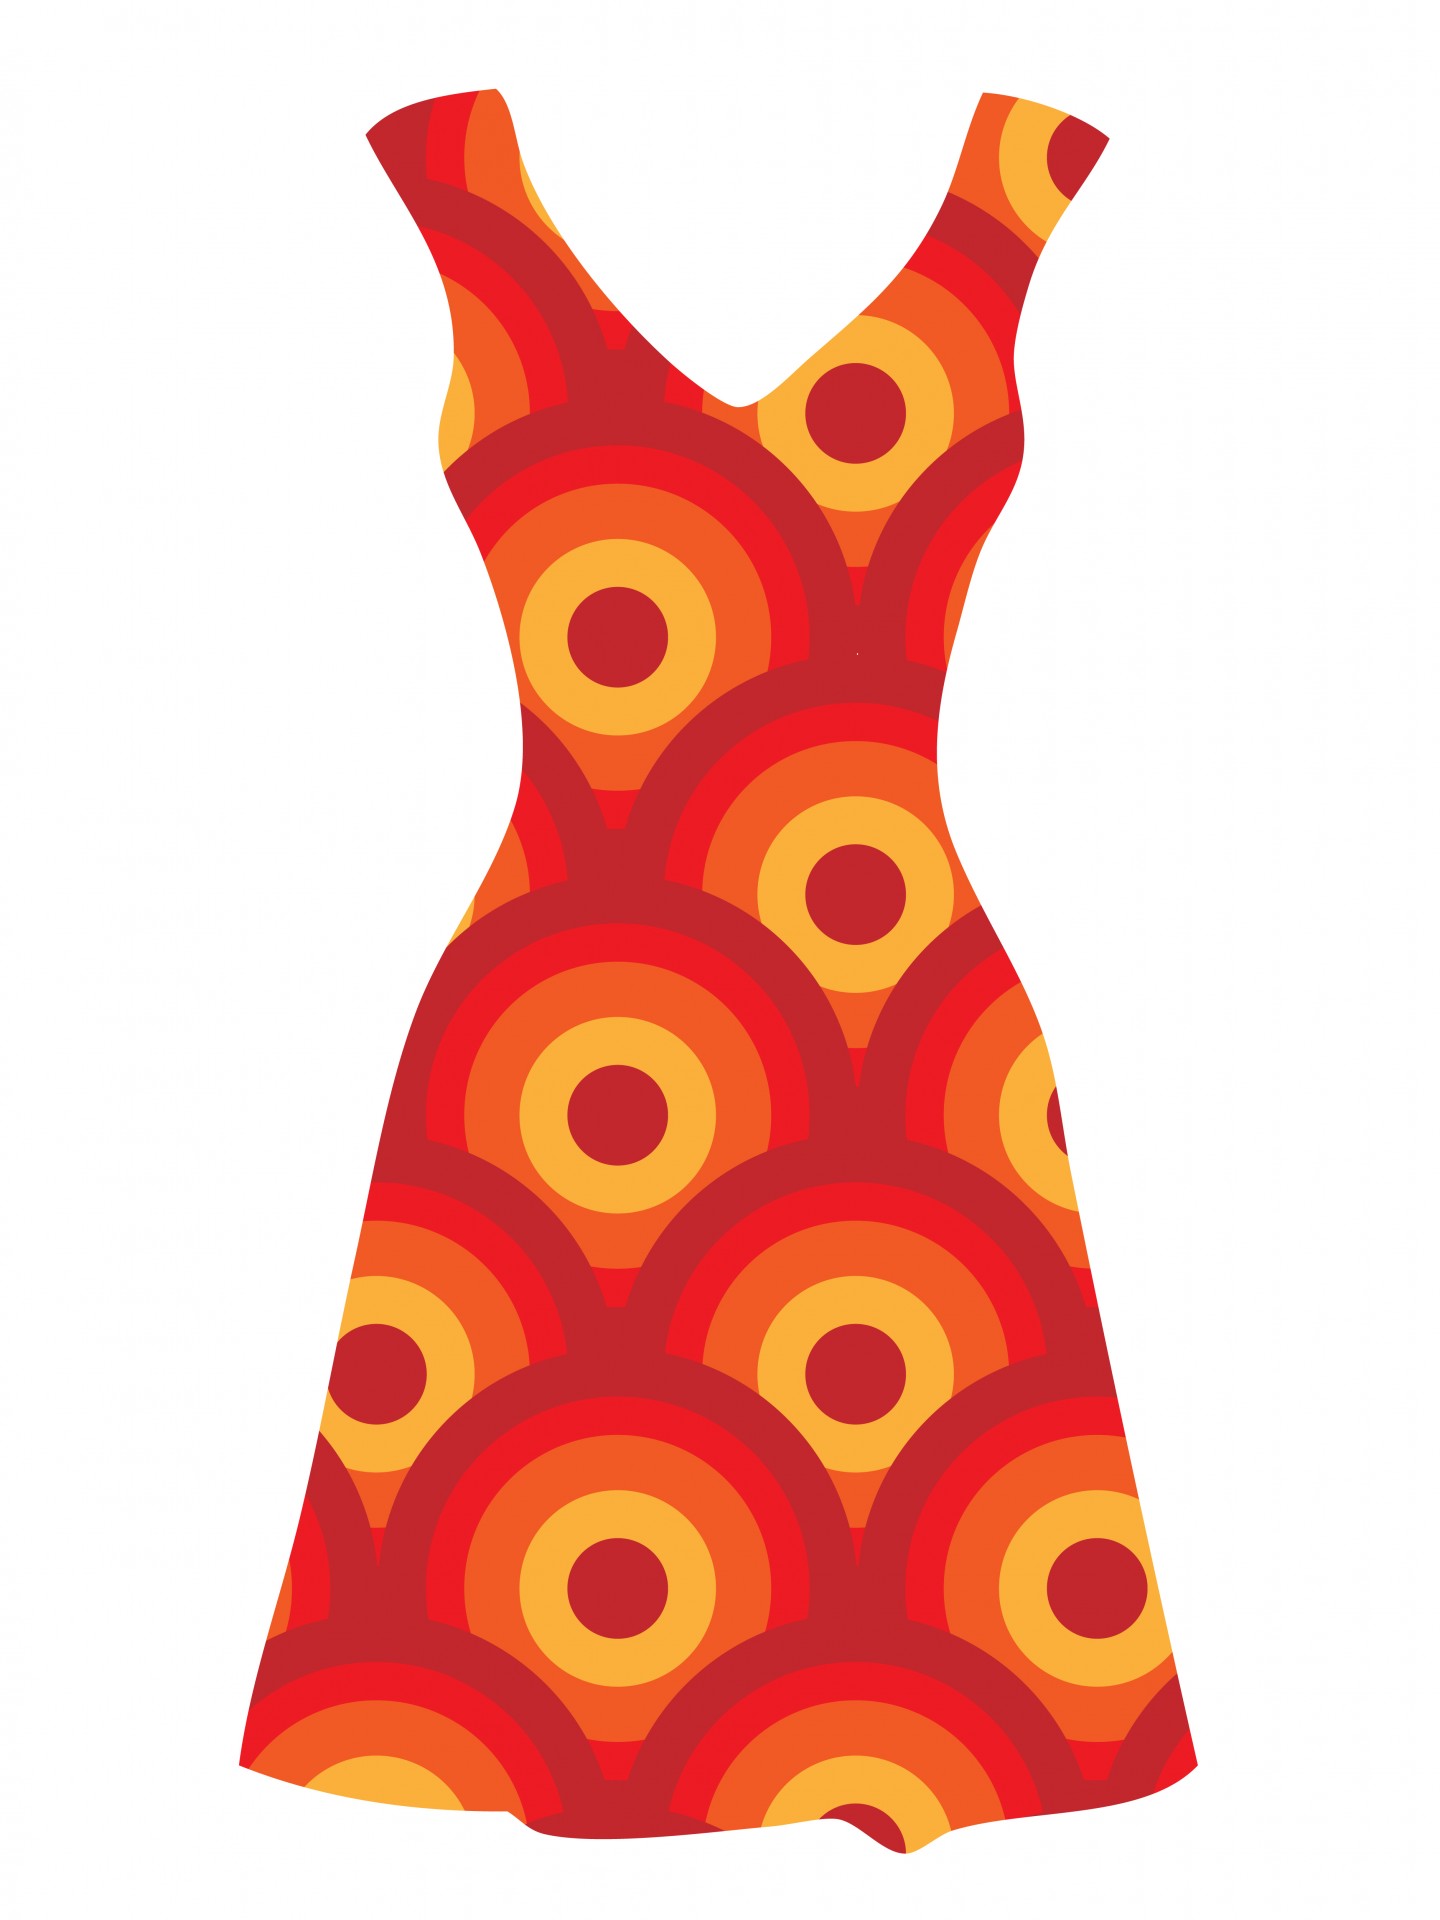 Vintage Orange Dress Clipart